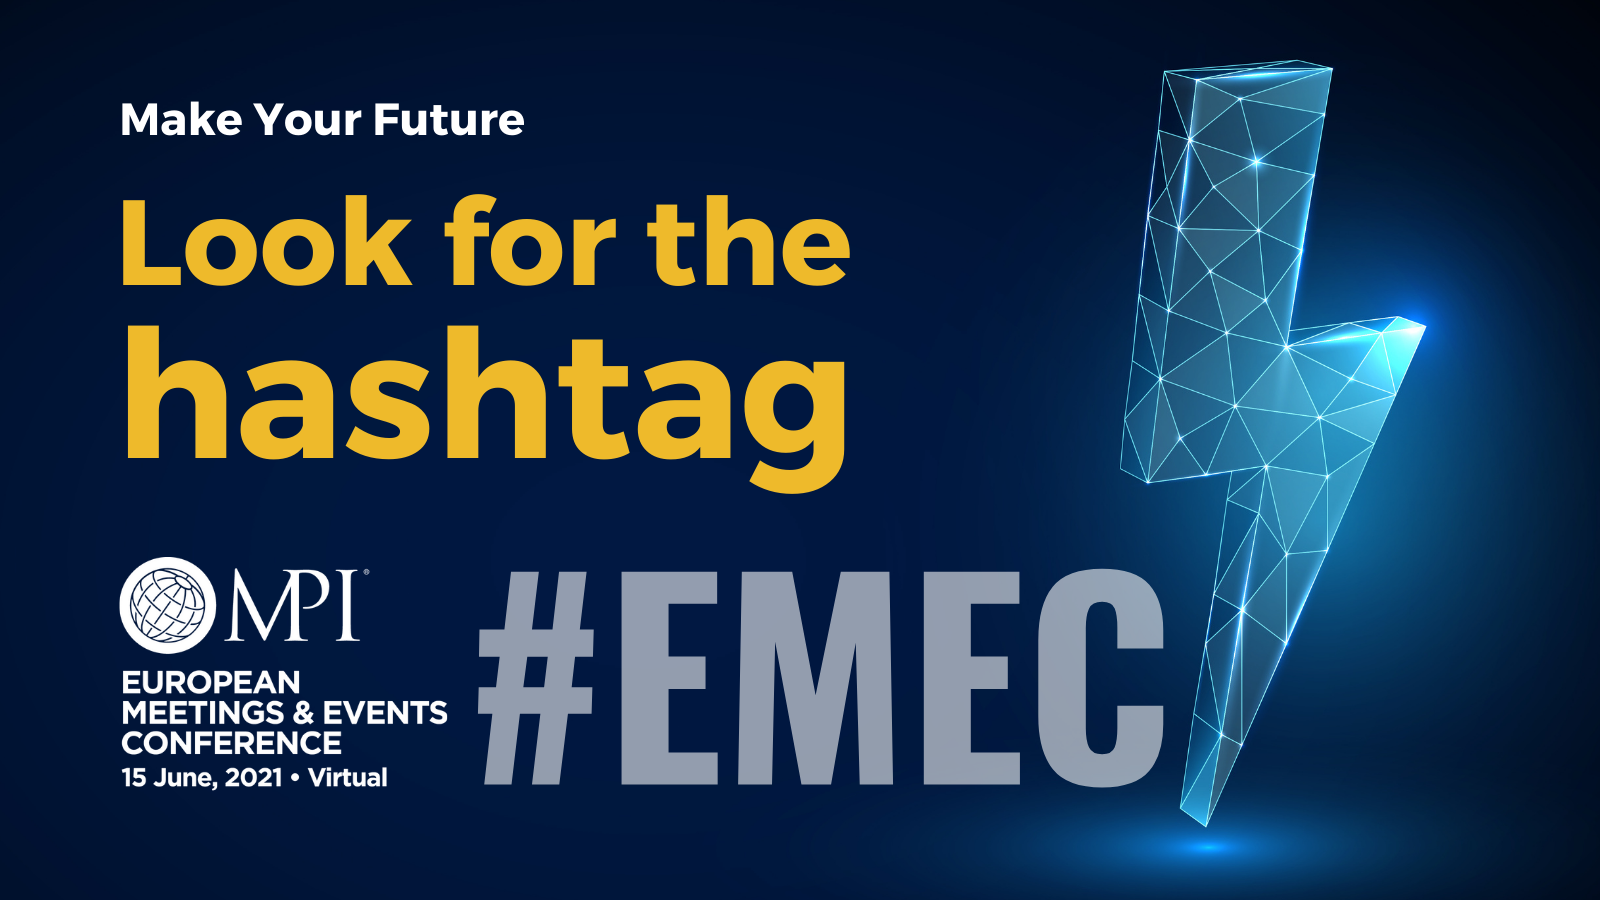 #EMEC Hashtag